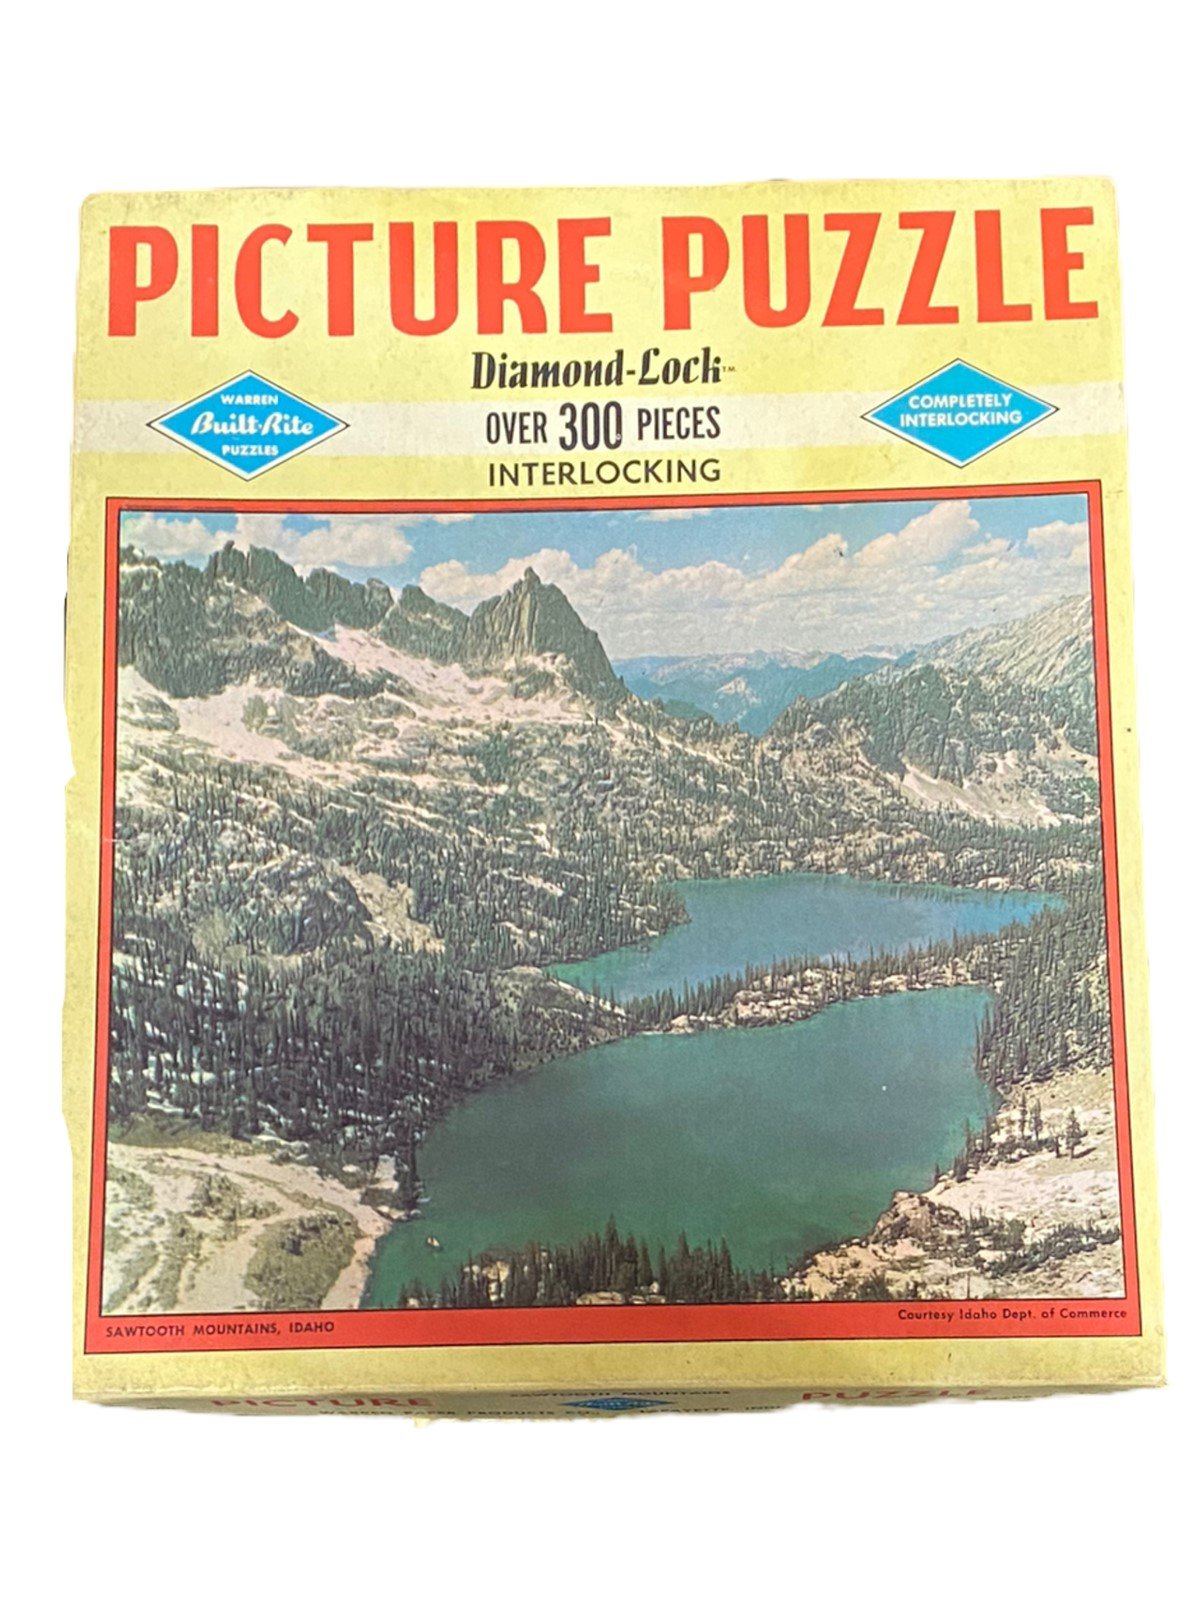 Warren Built-Rite Puzzles Picture Puzzle Diamond-lock Over 300 Pieces